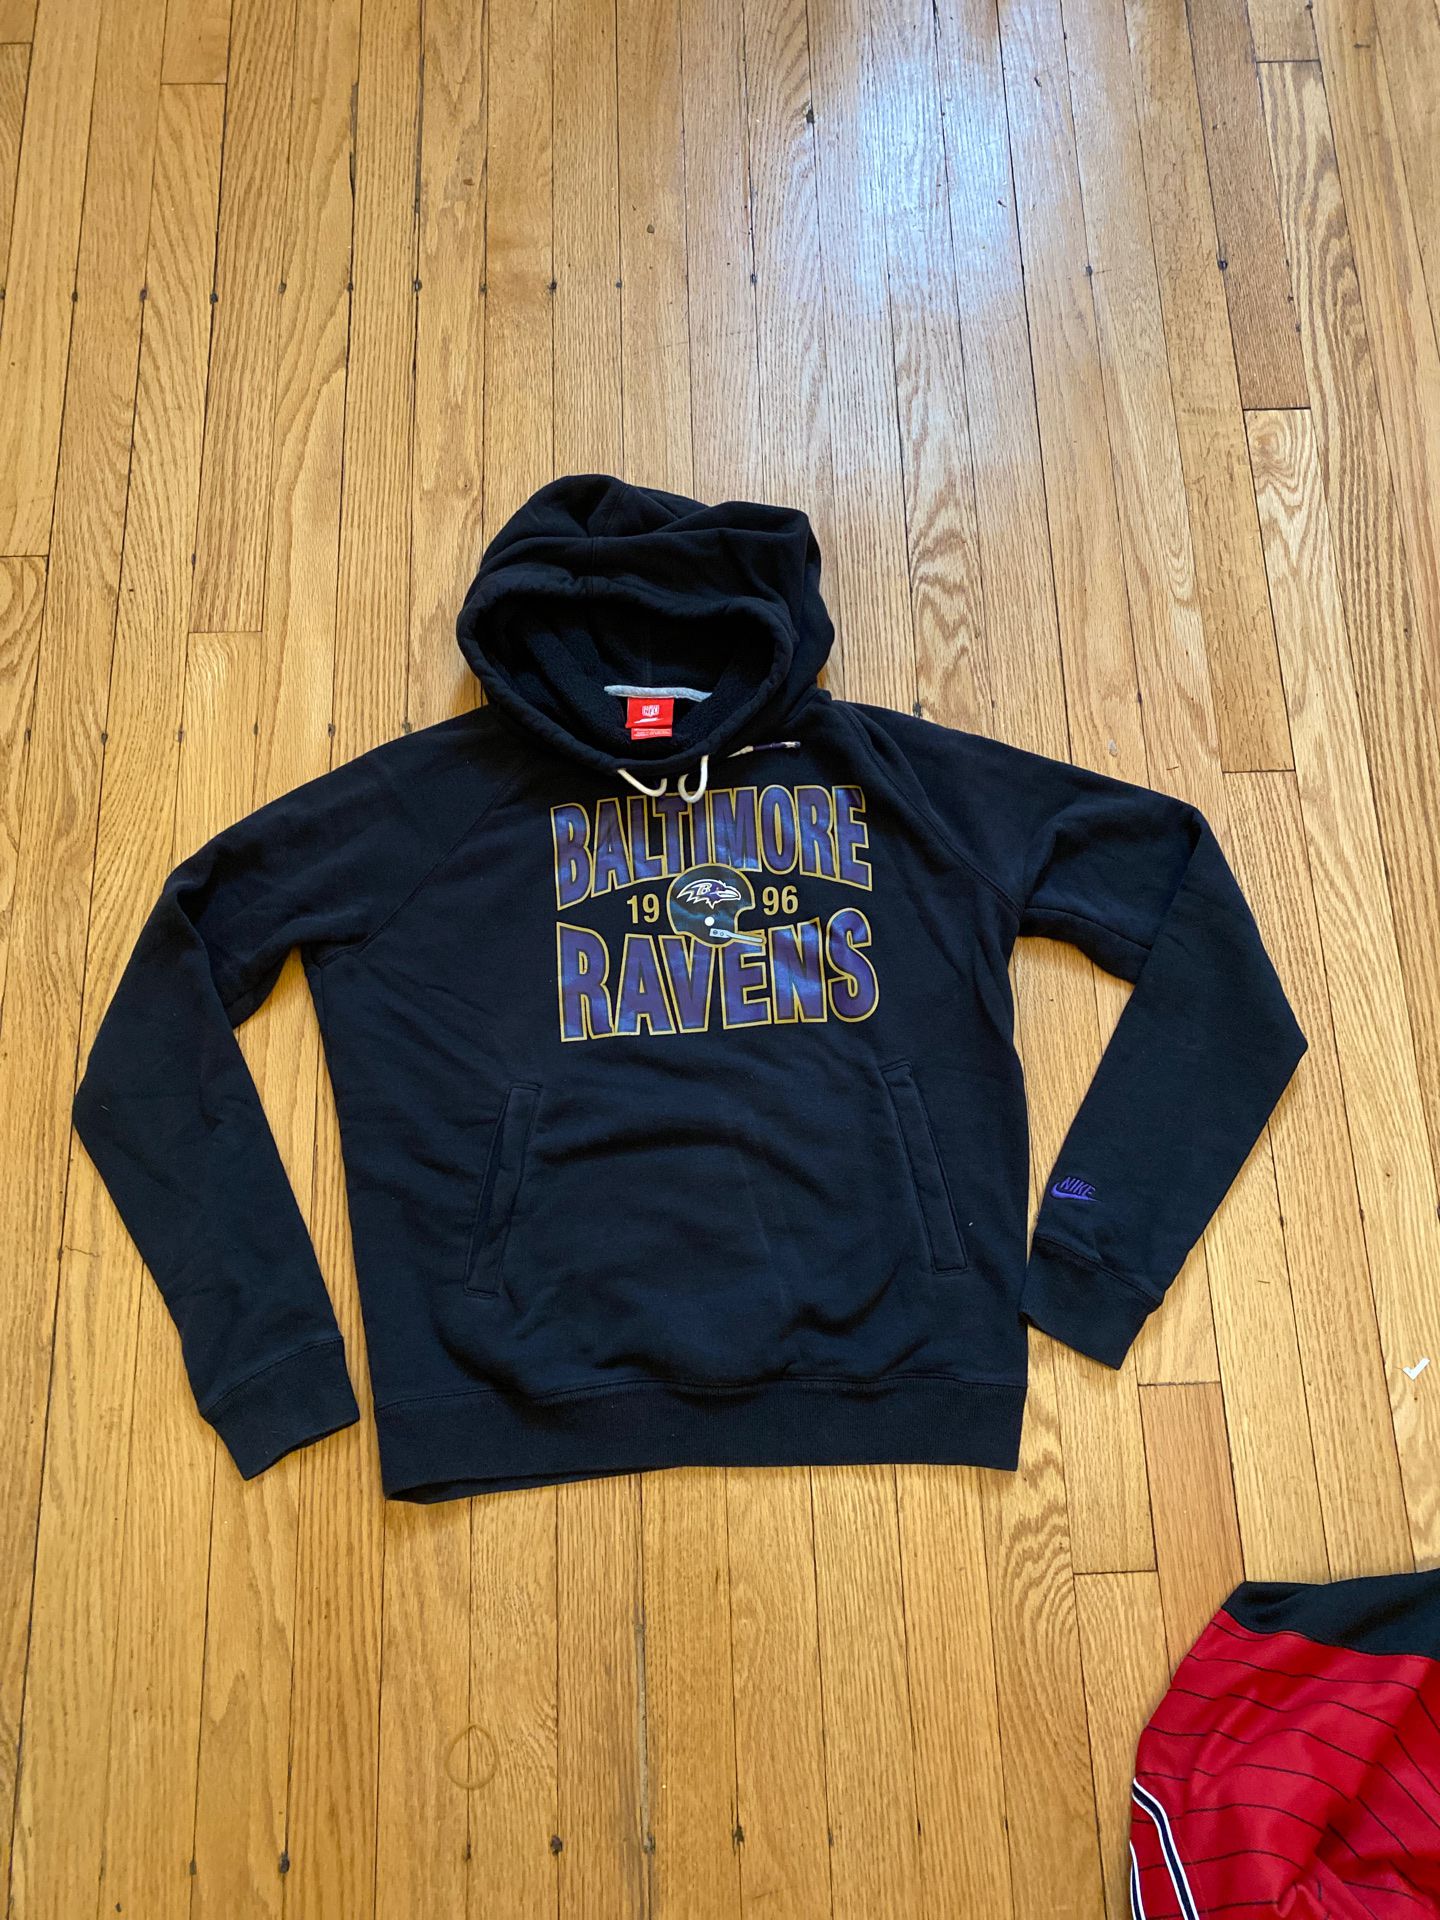 Vintage Nike 1996 Baltimore ravens nfl sweatshirt